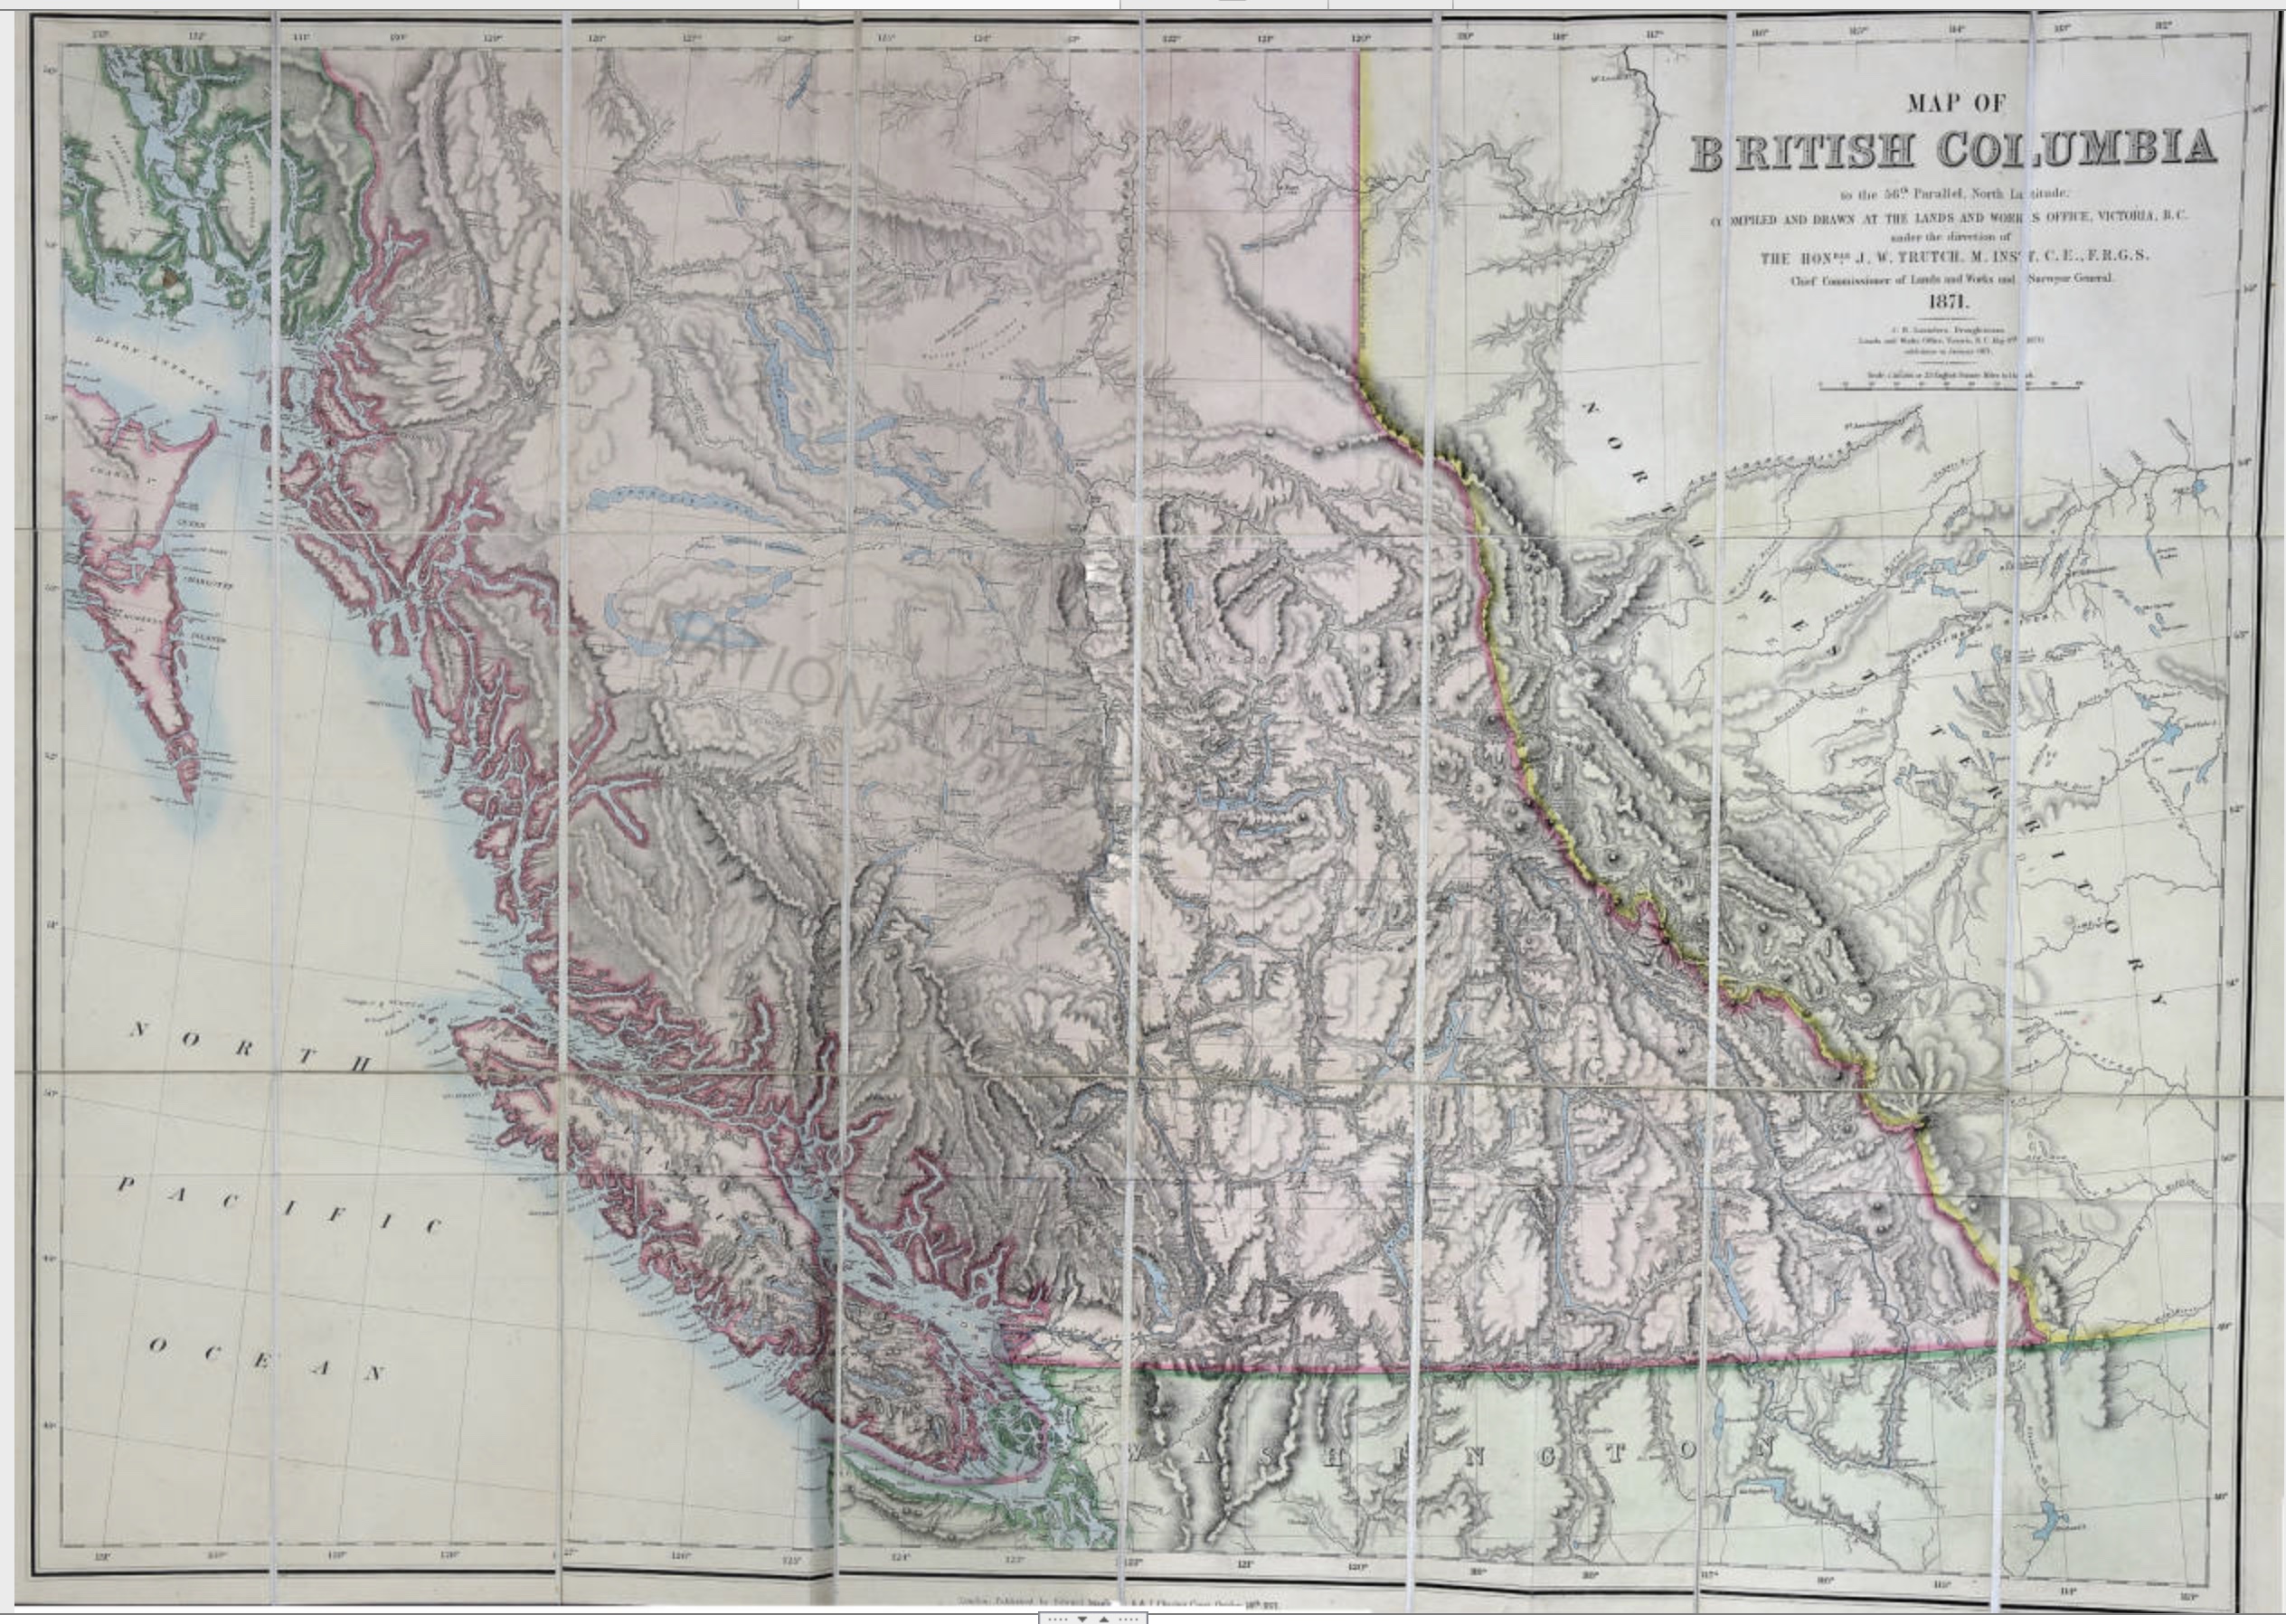 Trutch, Joseph William. Map of British Columbia to the 56th Parallel North Latitude, 1871